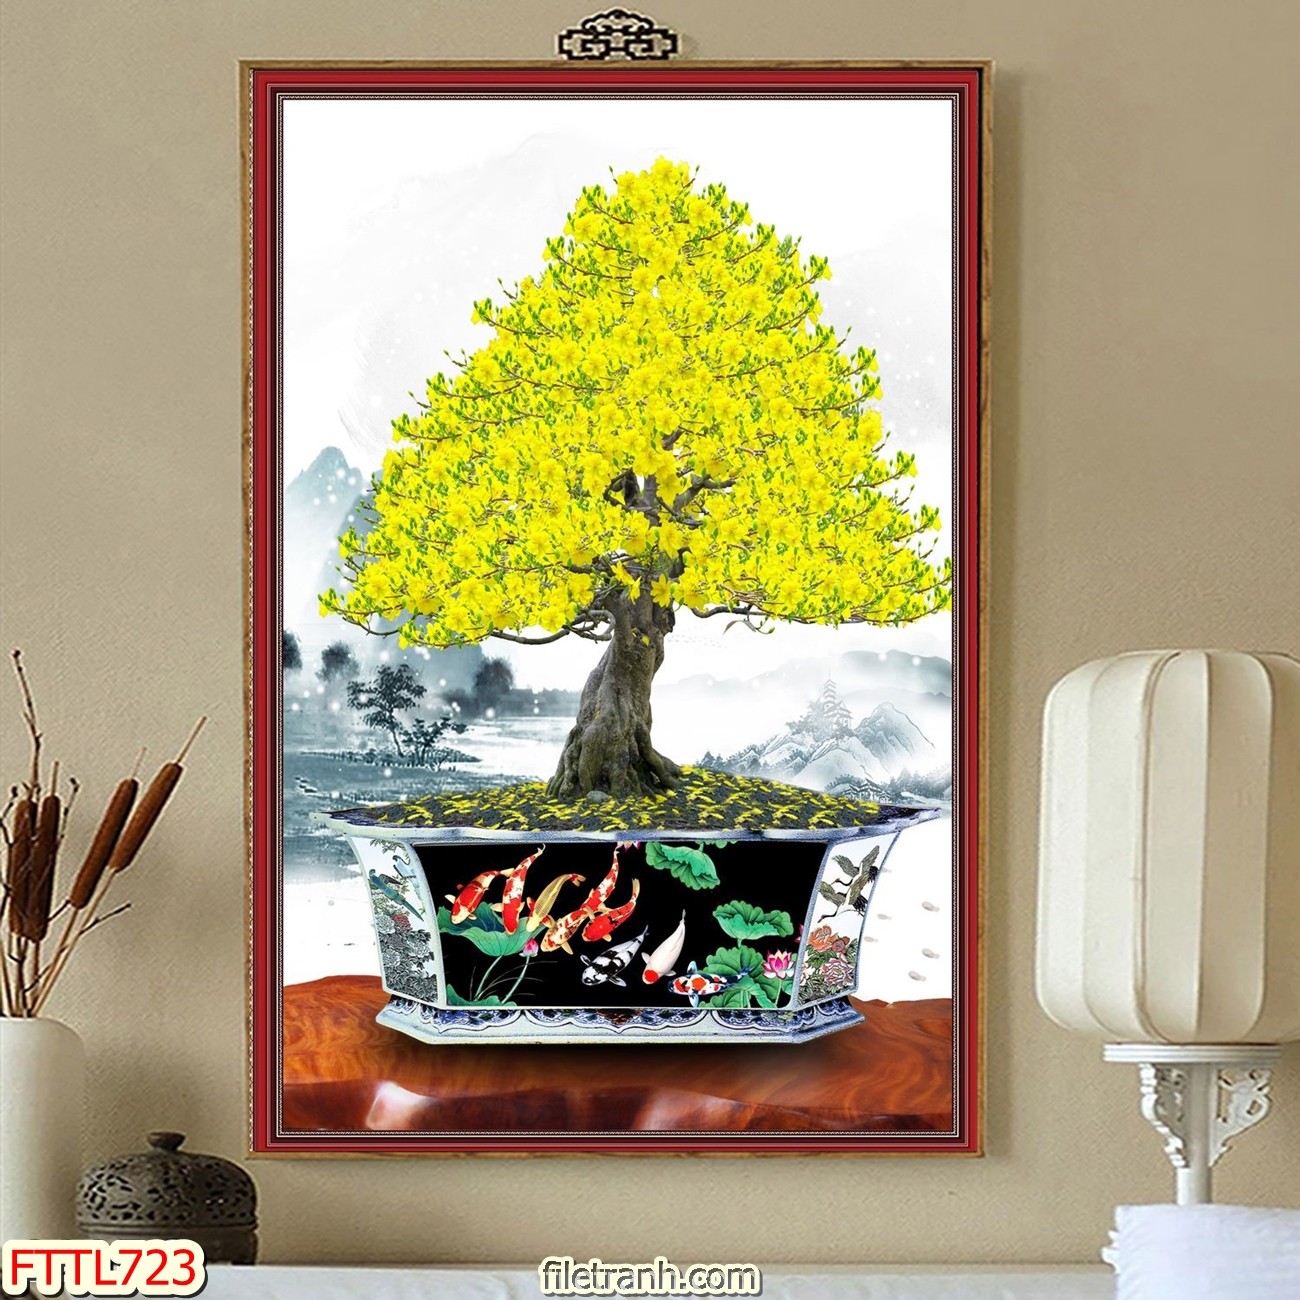 https://filetranh.com/file-tranh-chau-mai-bonsai/file-tranh-chau-mai-bonsai-fttl723.html